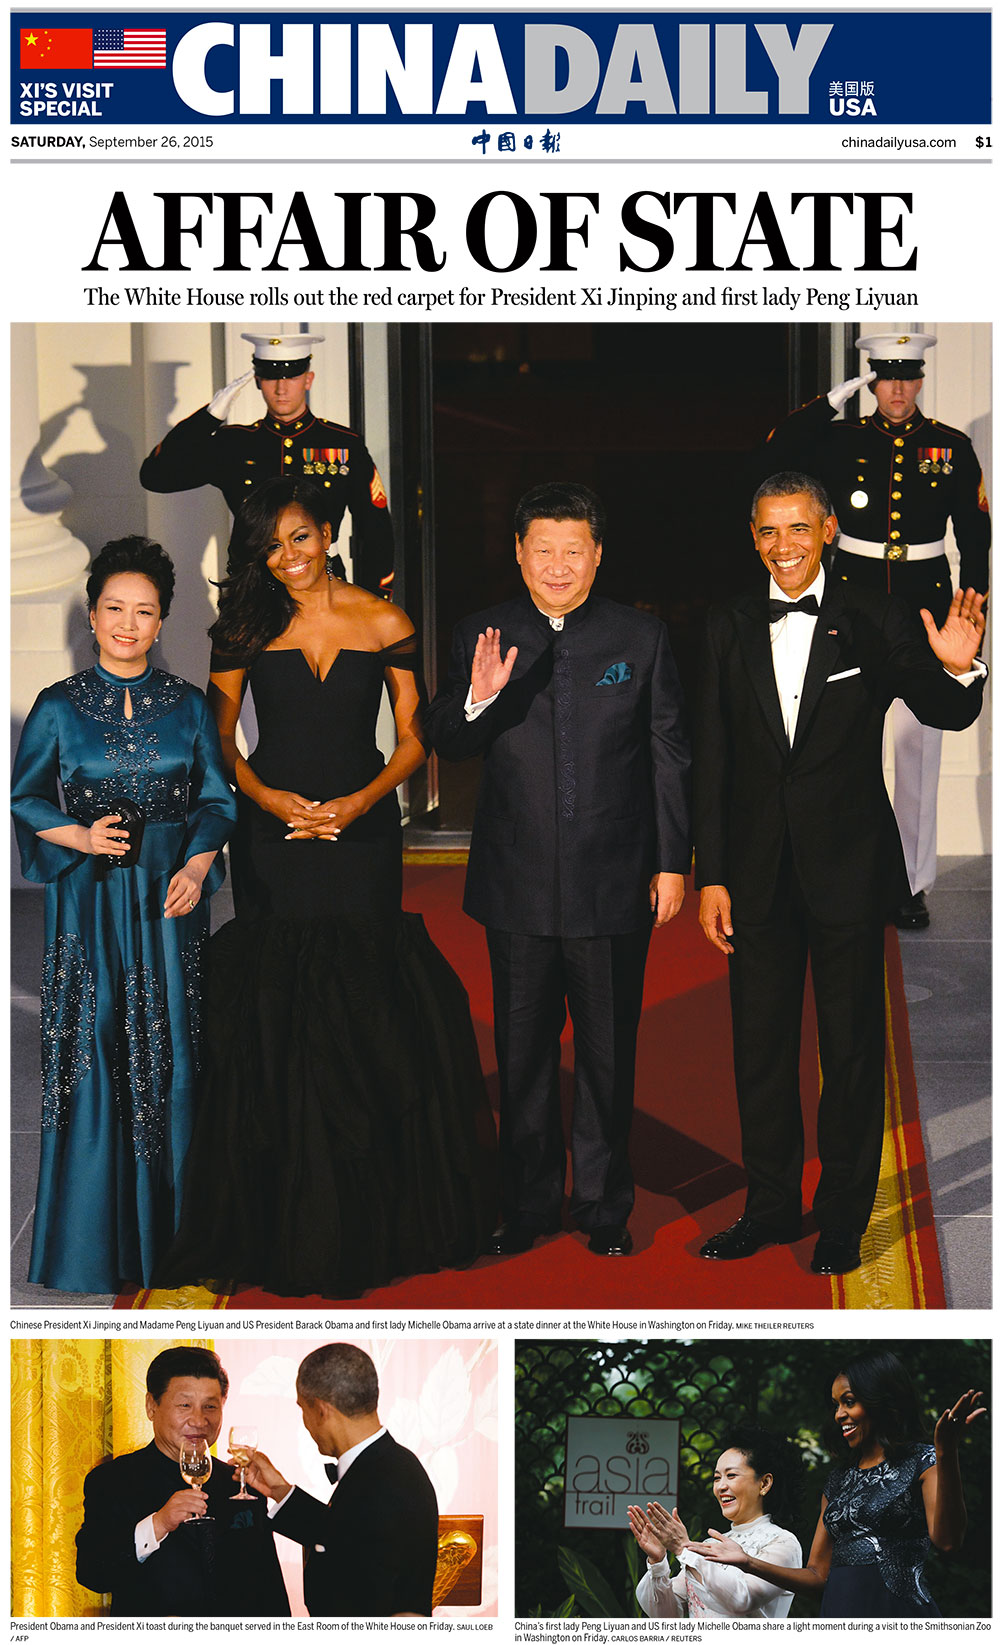 ‘China Daily,’ U.S. edition, September 26, 2015.